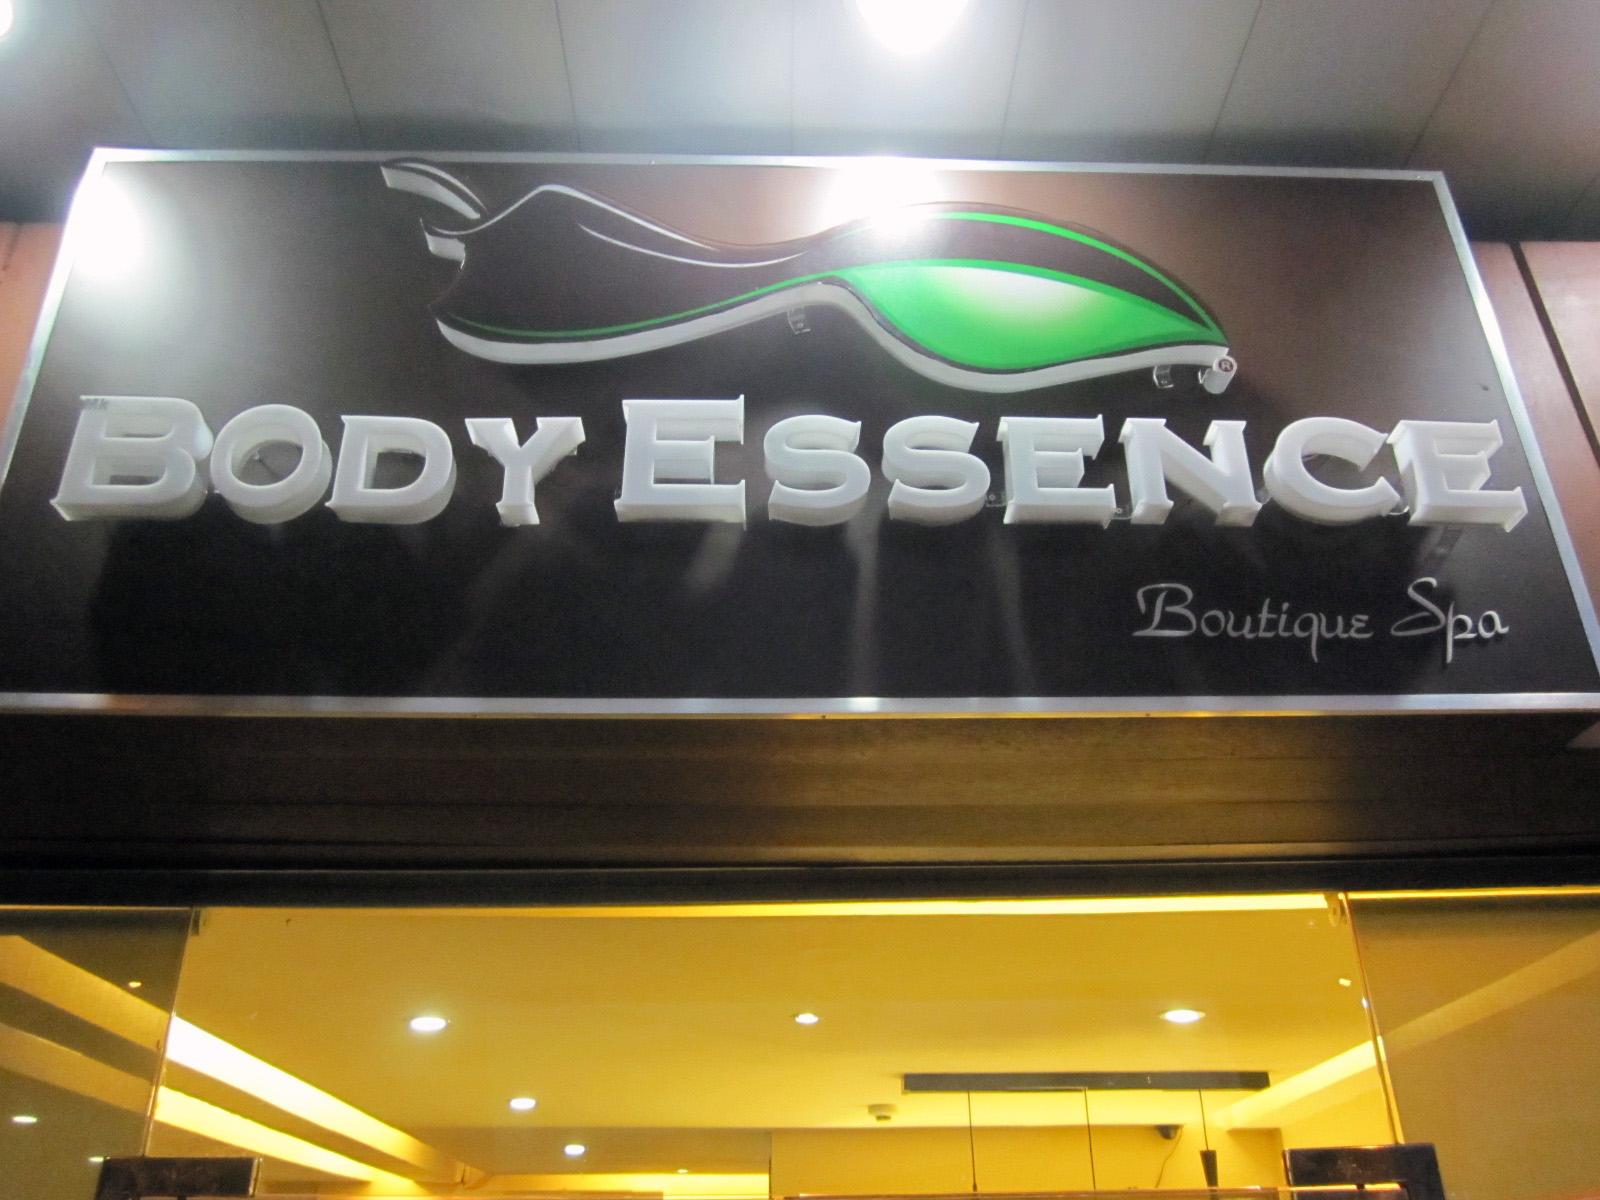 Body Essence Boutique Spa